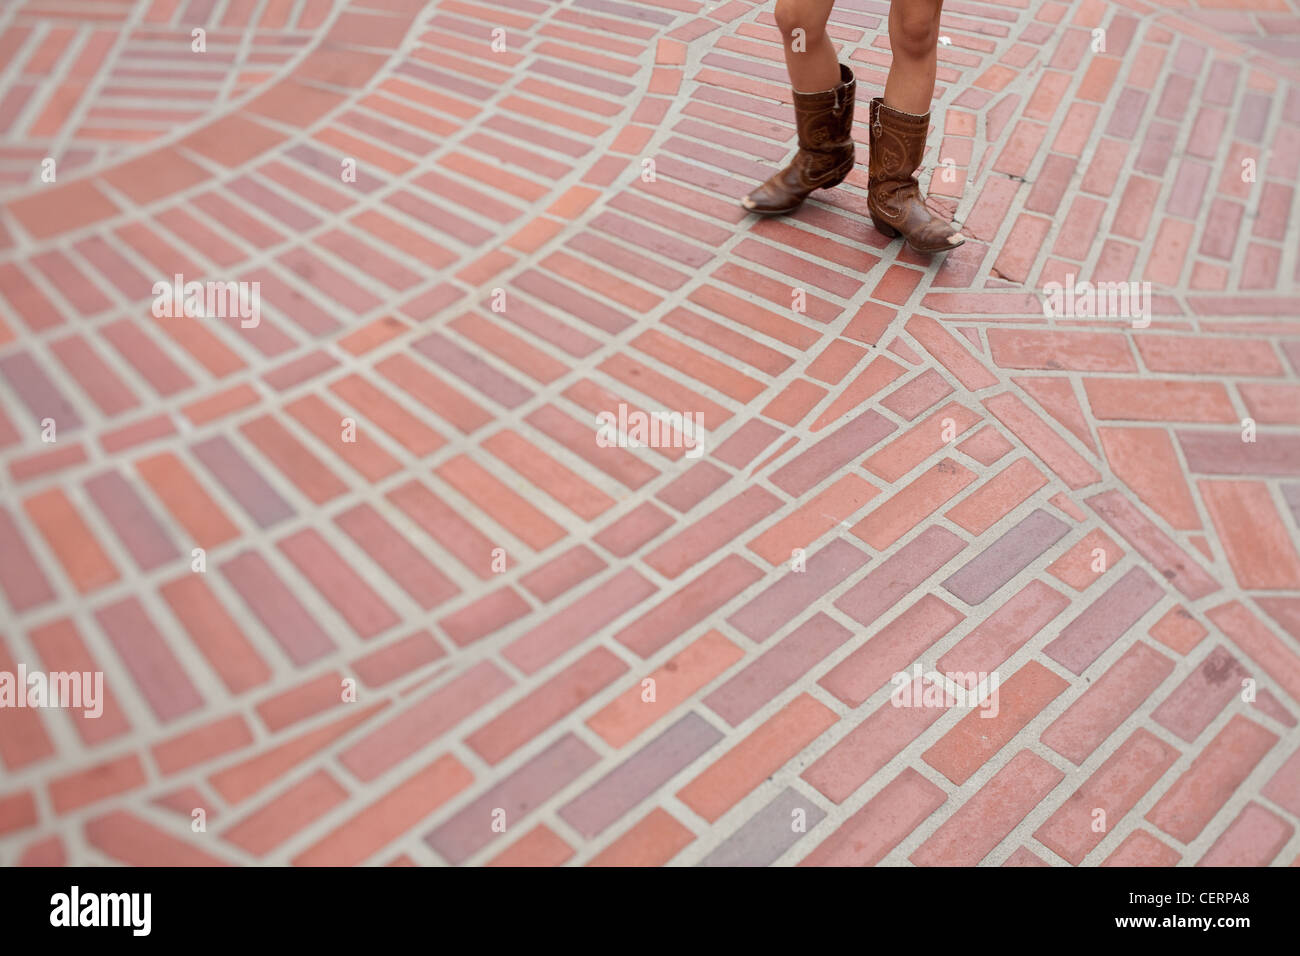 child legs in cowboy boots walking on brick design Stock Photo